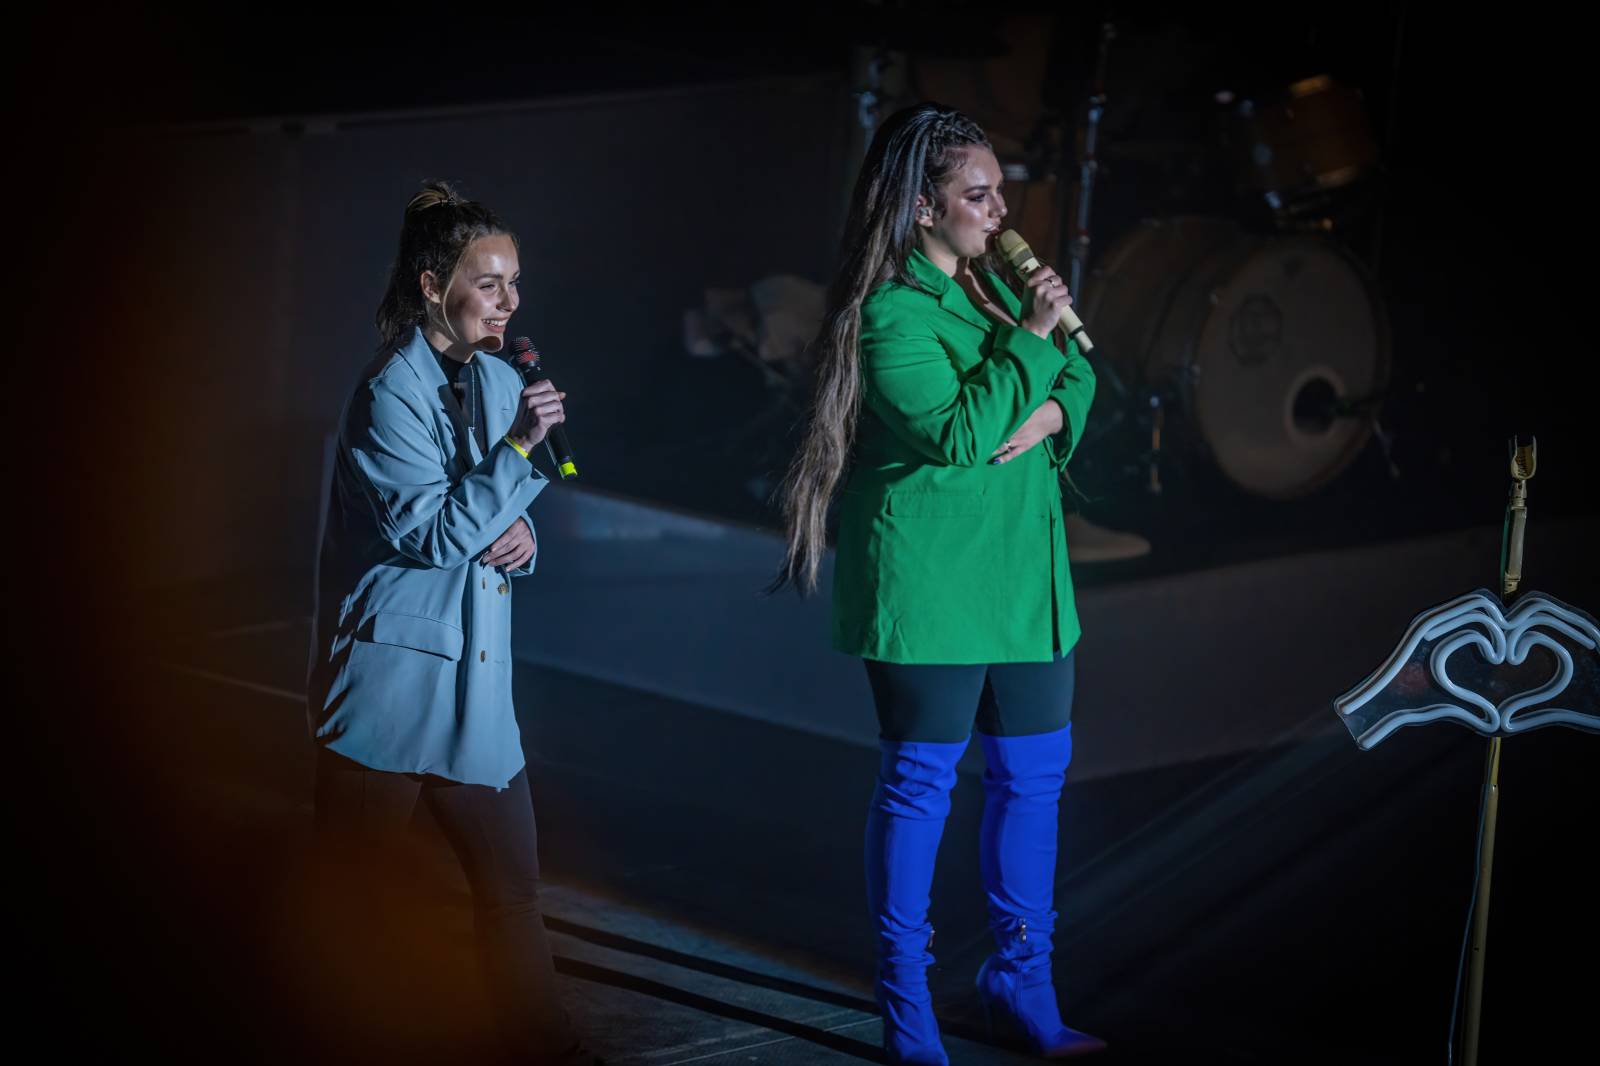 Ewa Farna si podmanila pražské Forum Karlín a ohlásila koncert v O2 areně